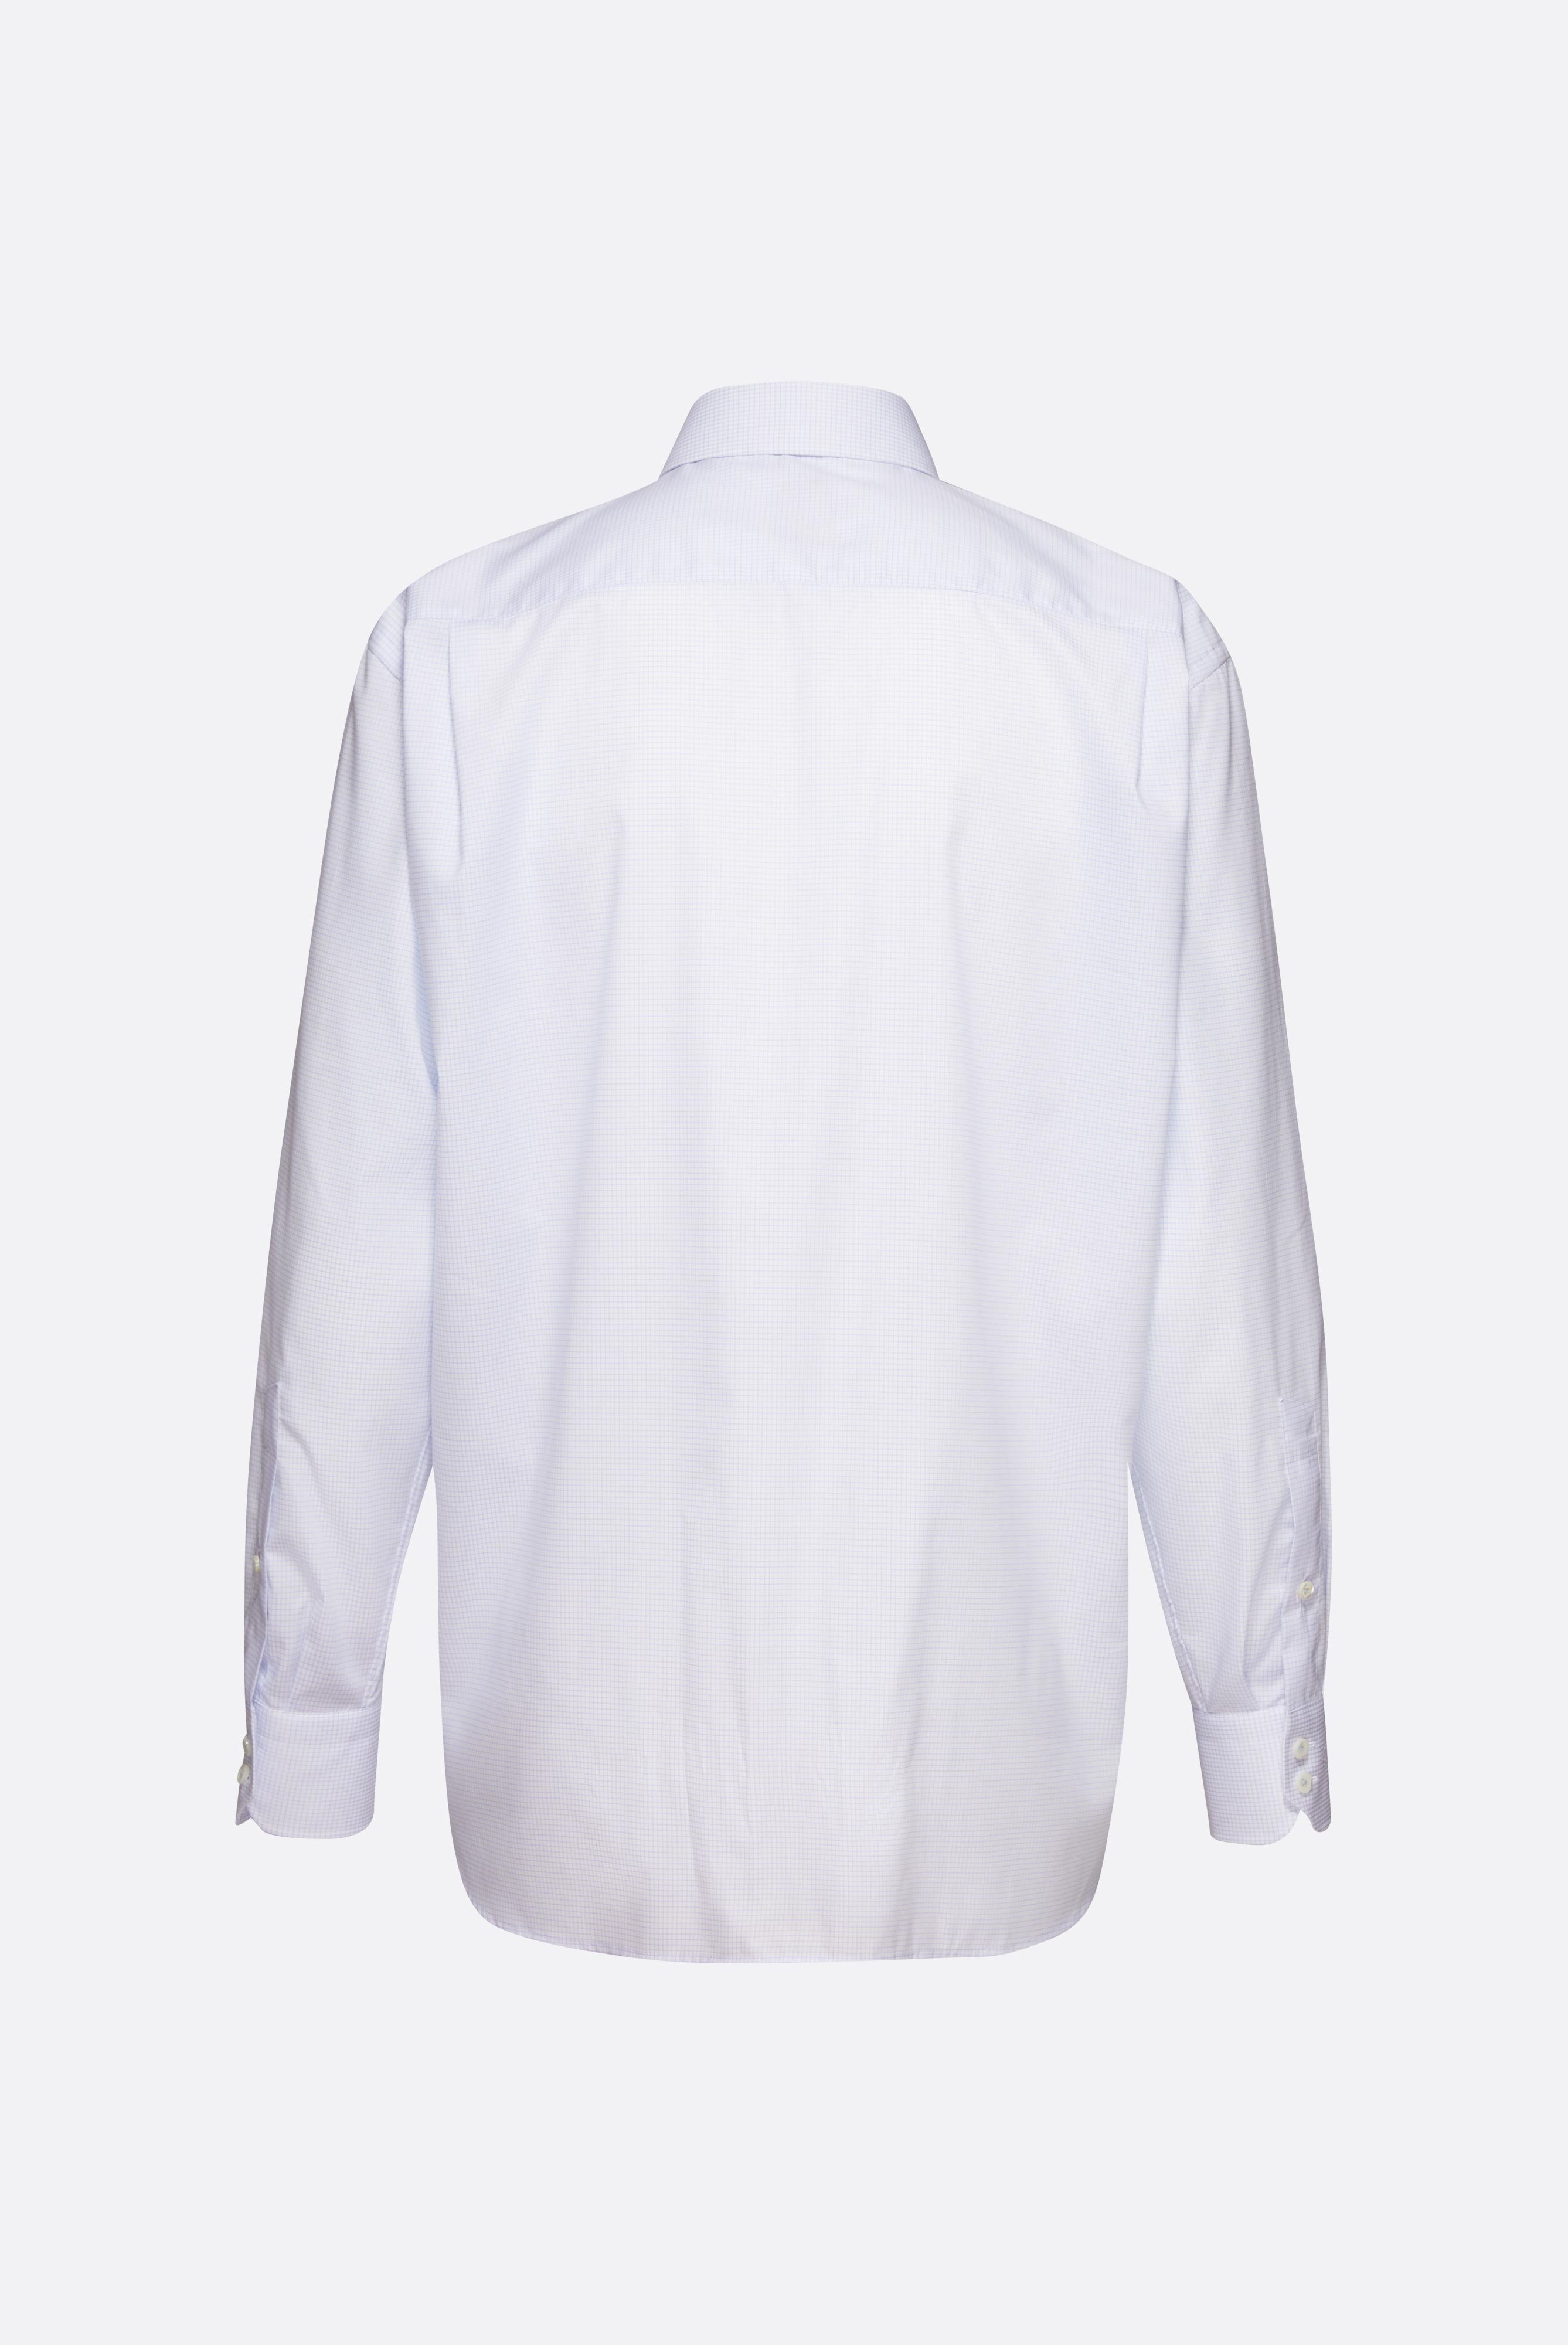 Easy Iron Shirts+Wrinkel free checked shirt comfort fit+20.2021.BQ.151782.720.42